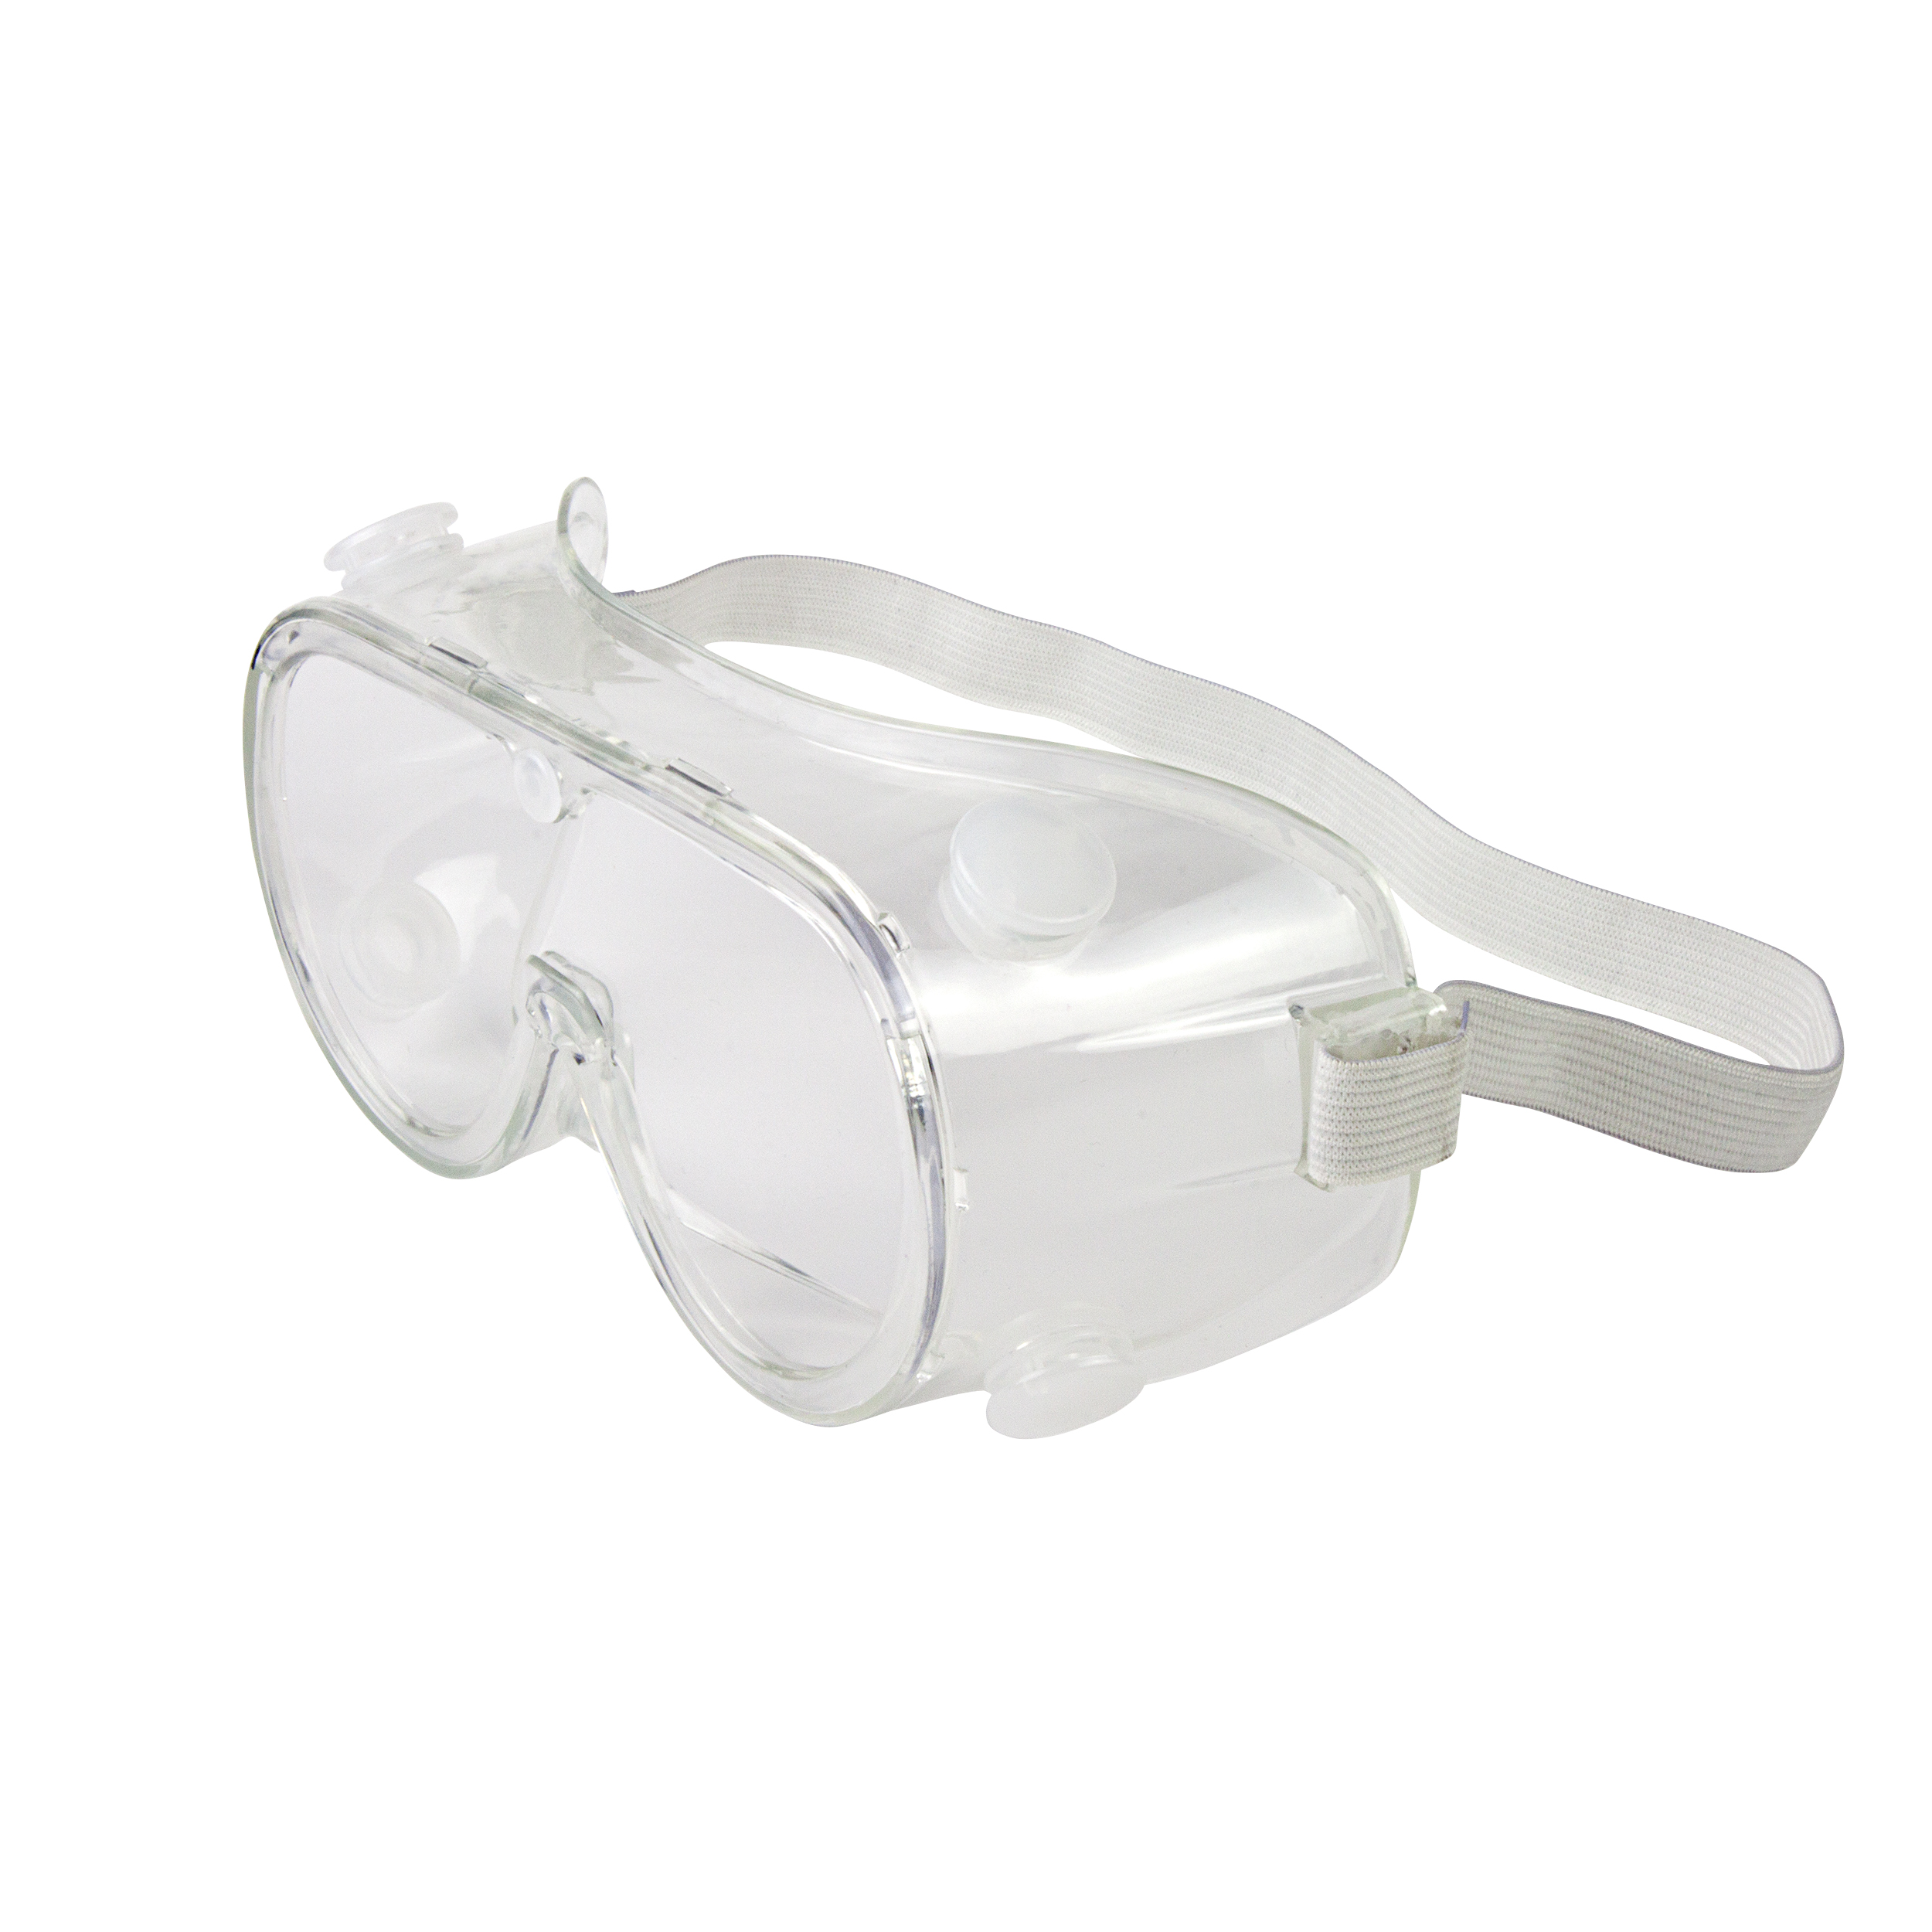 Protective Eye Goggles